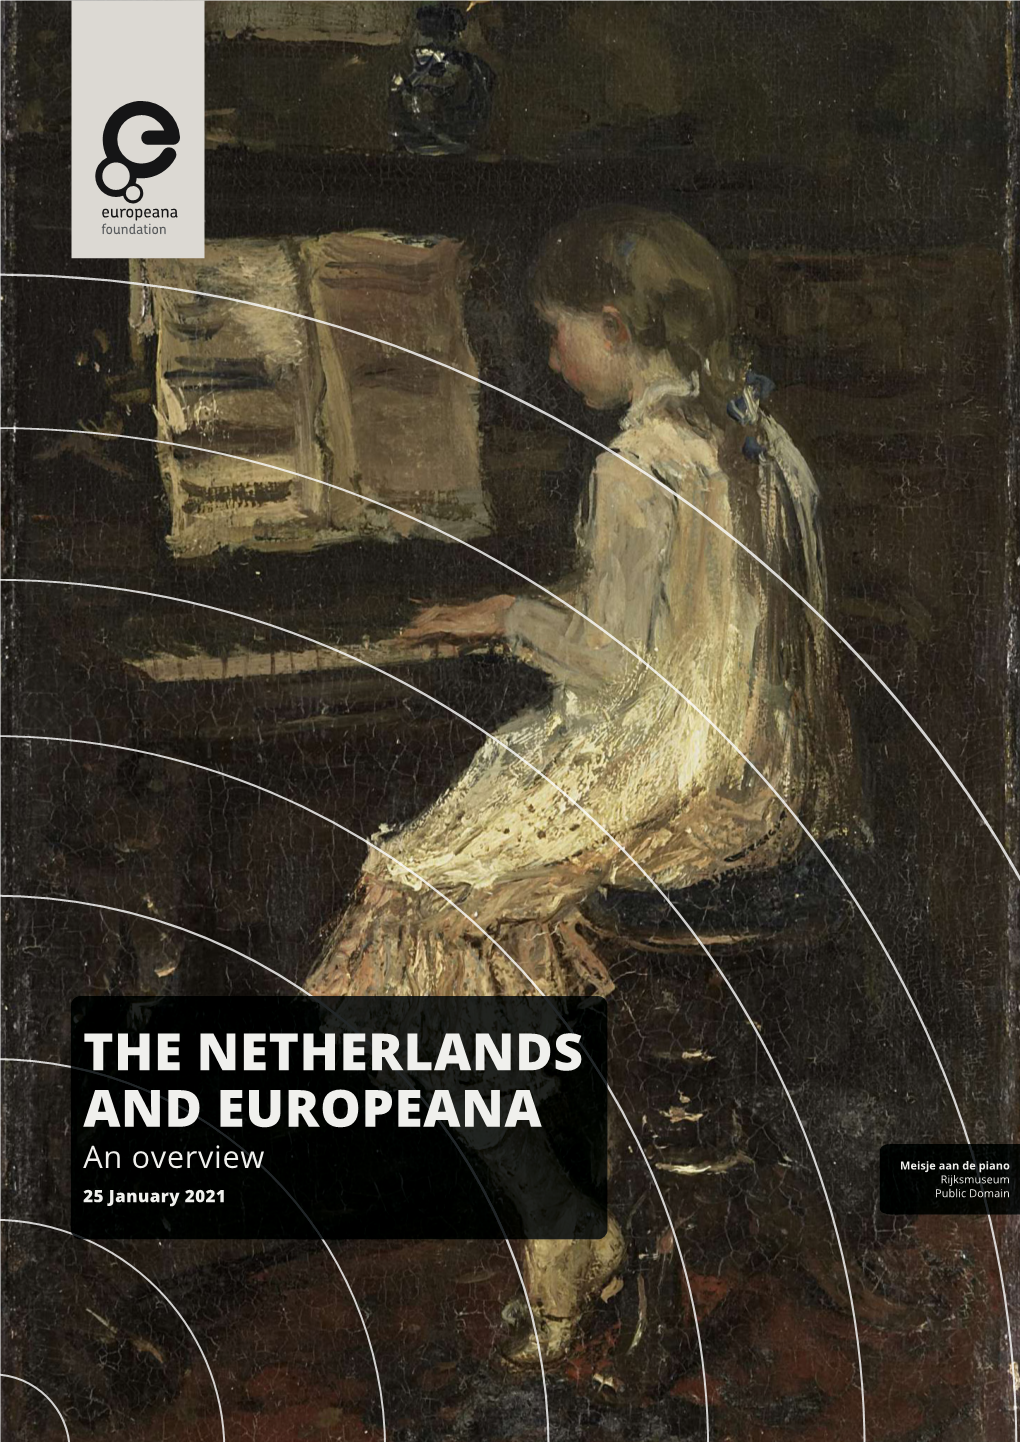 The Netherlands and Europeana